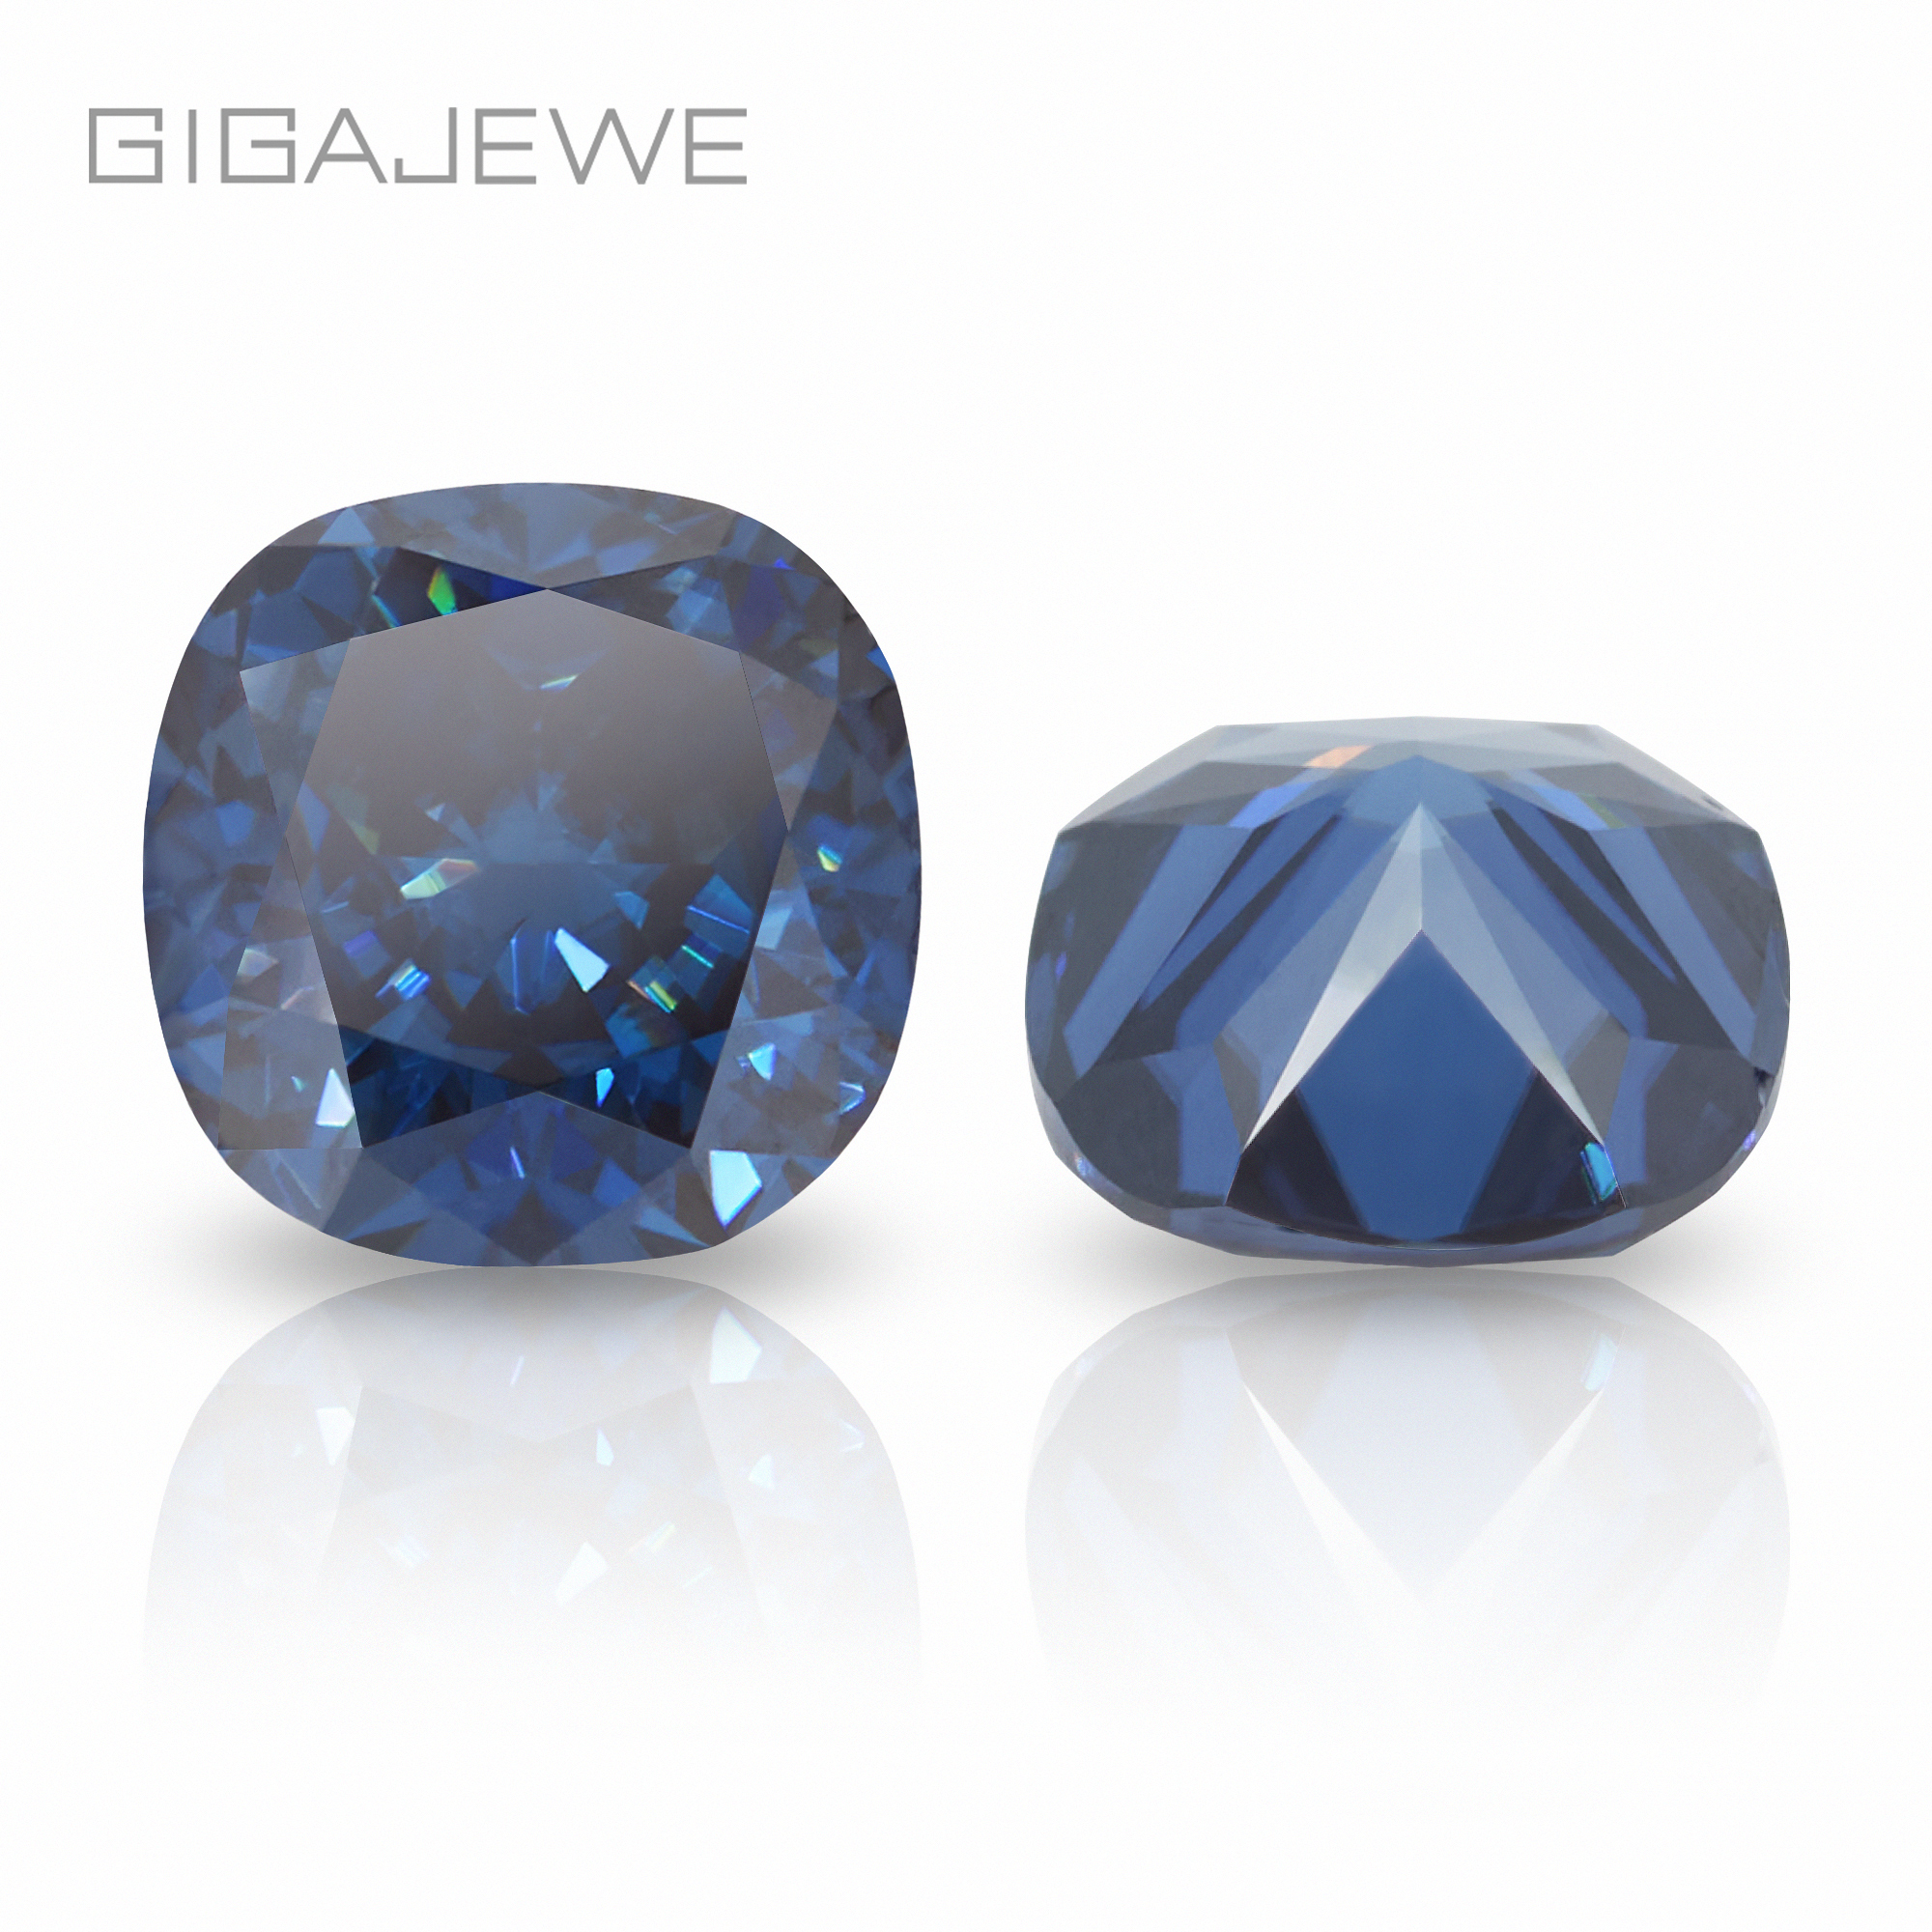 GIGAJEWE定制坐垫深蓝色VVS1天然生长莫桑石裸钻测试通过宝石首饰制作